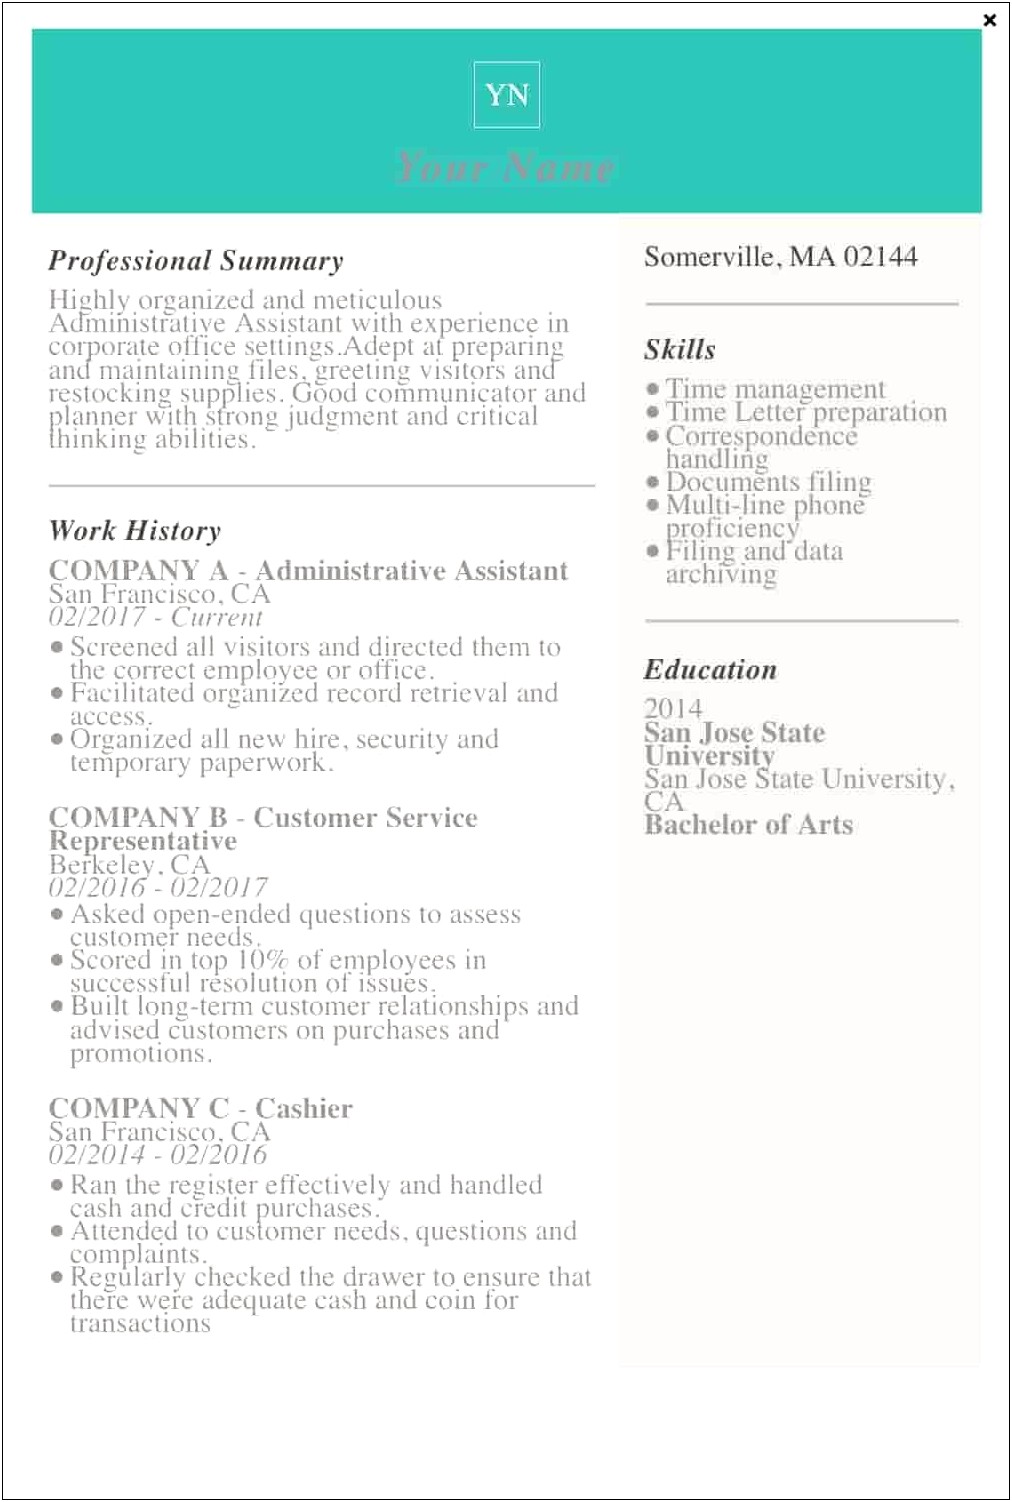 Resume Summary Statement Examples 2016